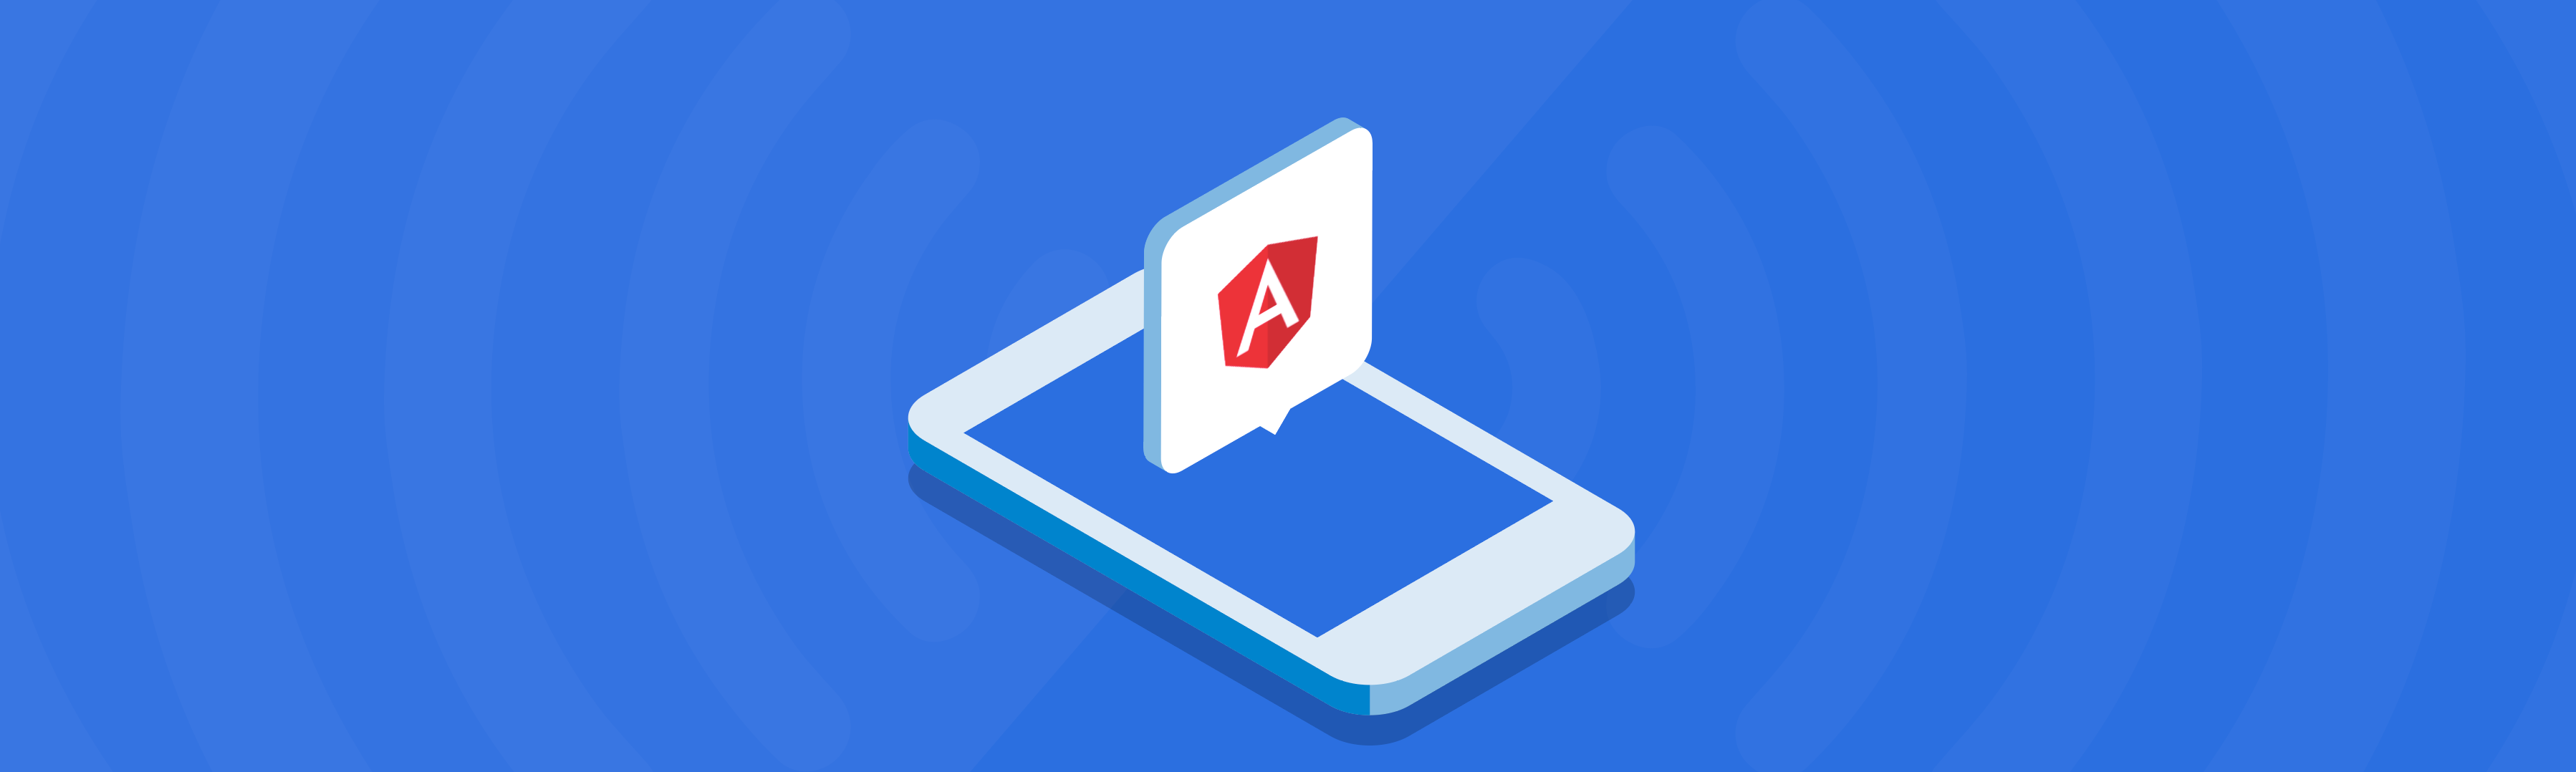 angular app